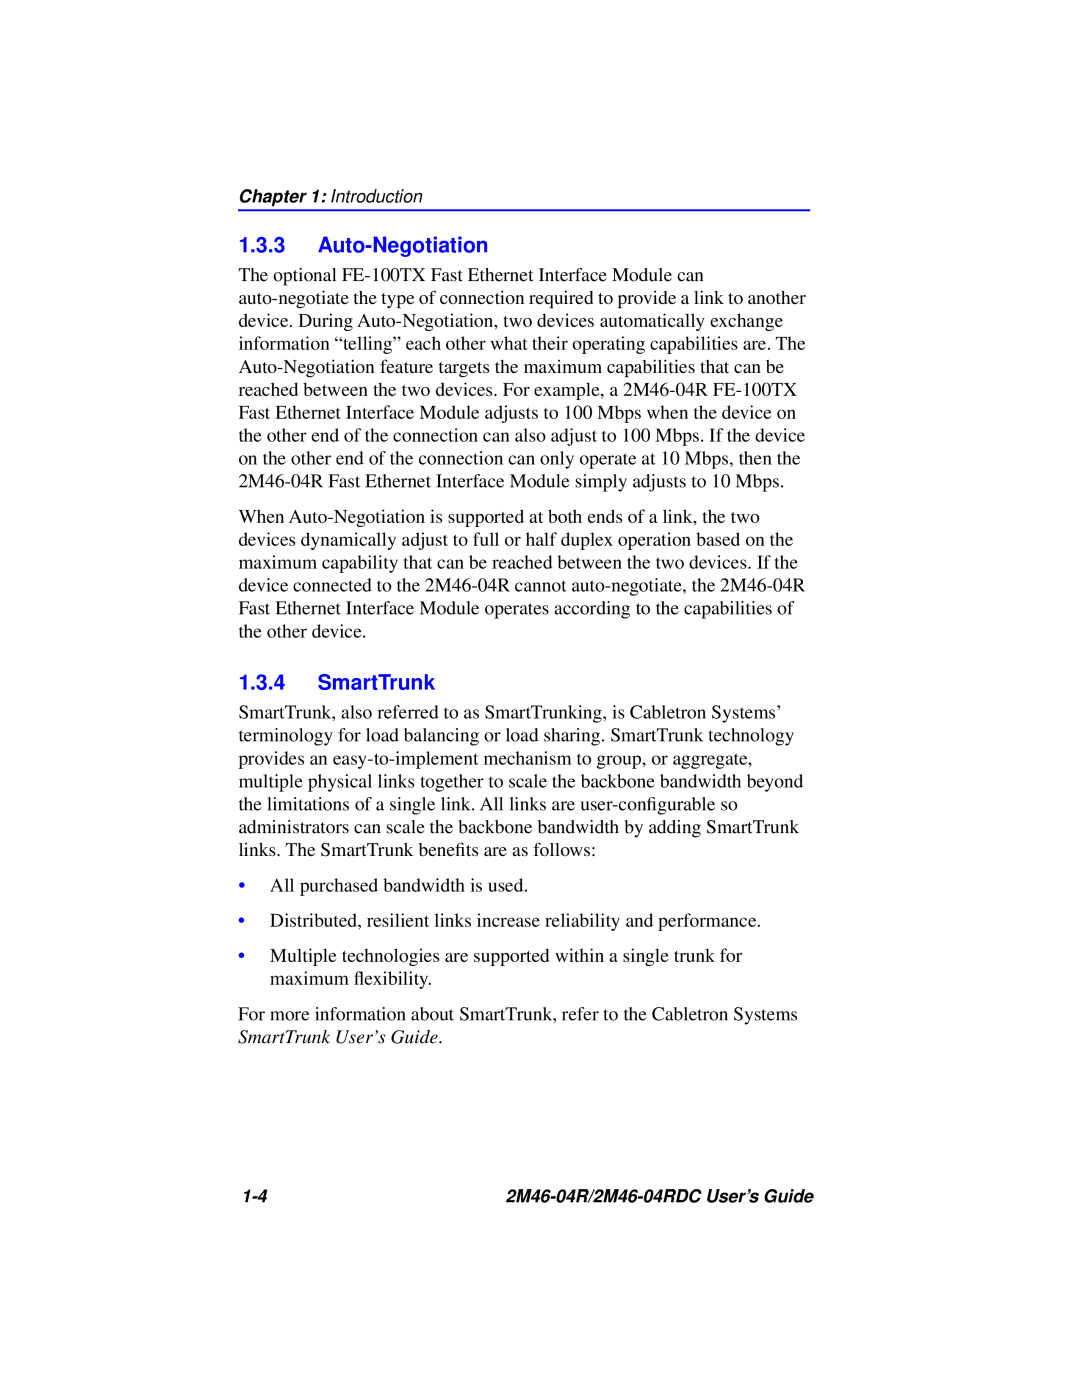 Cabletron Systems pmn manual Auto-Negotiation, SmartTrunk 